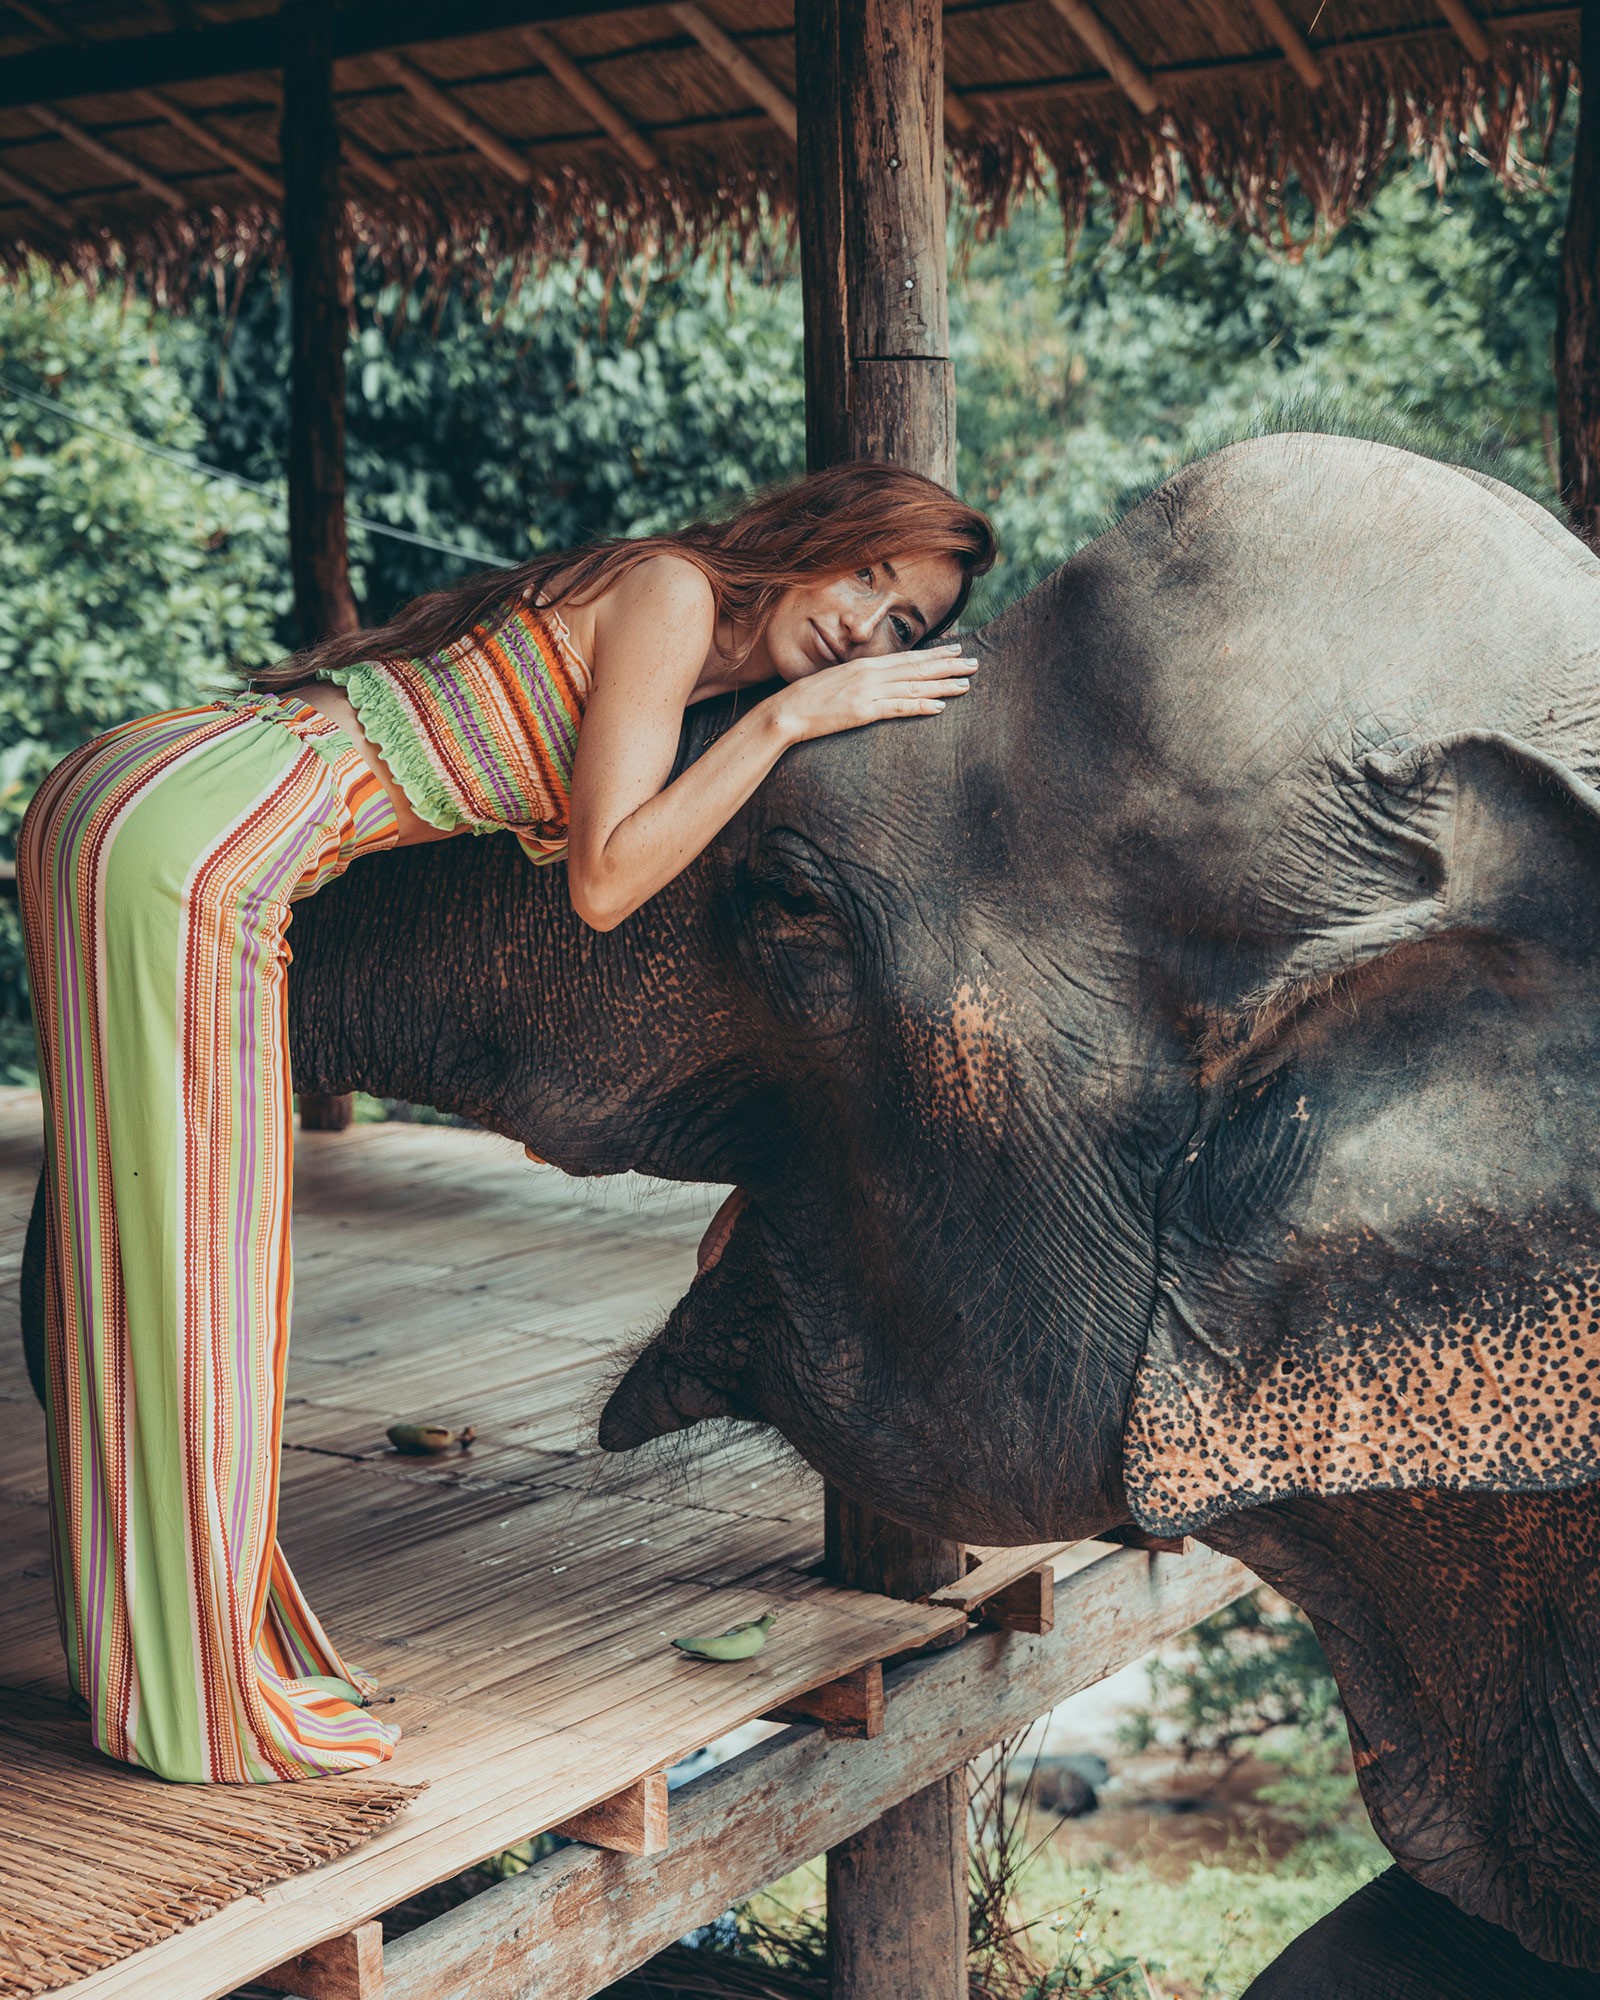 Elephant Morning Call – 30 min photo shoot with an elephant